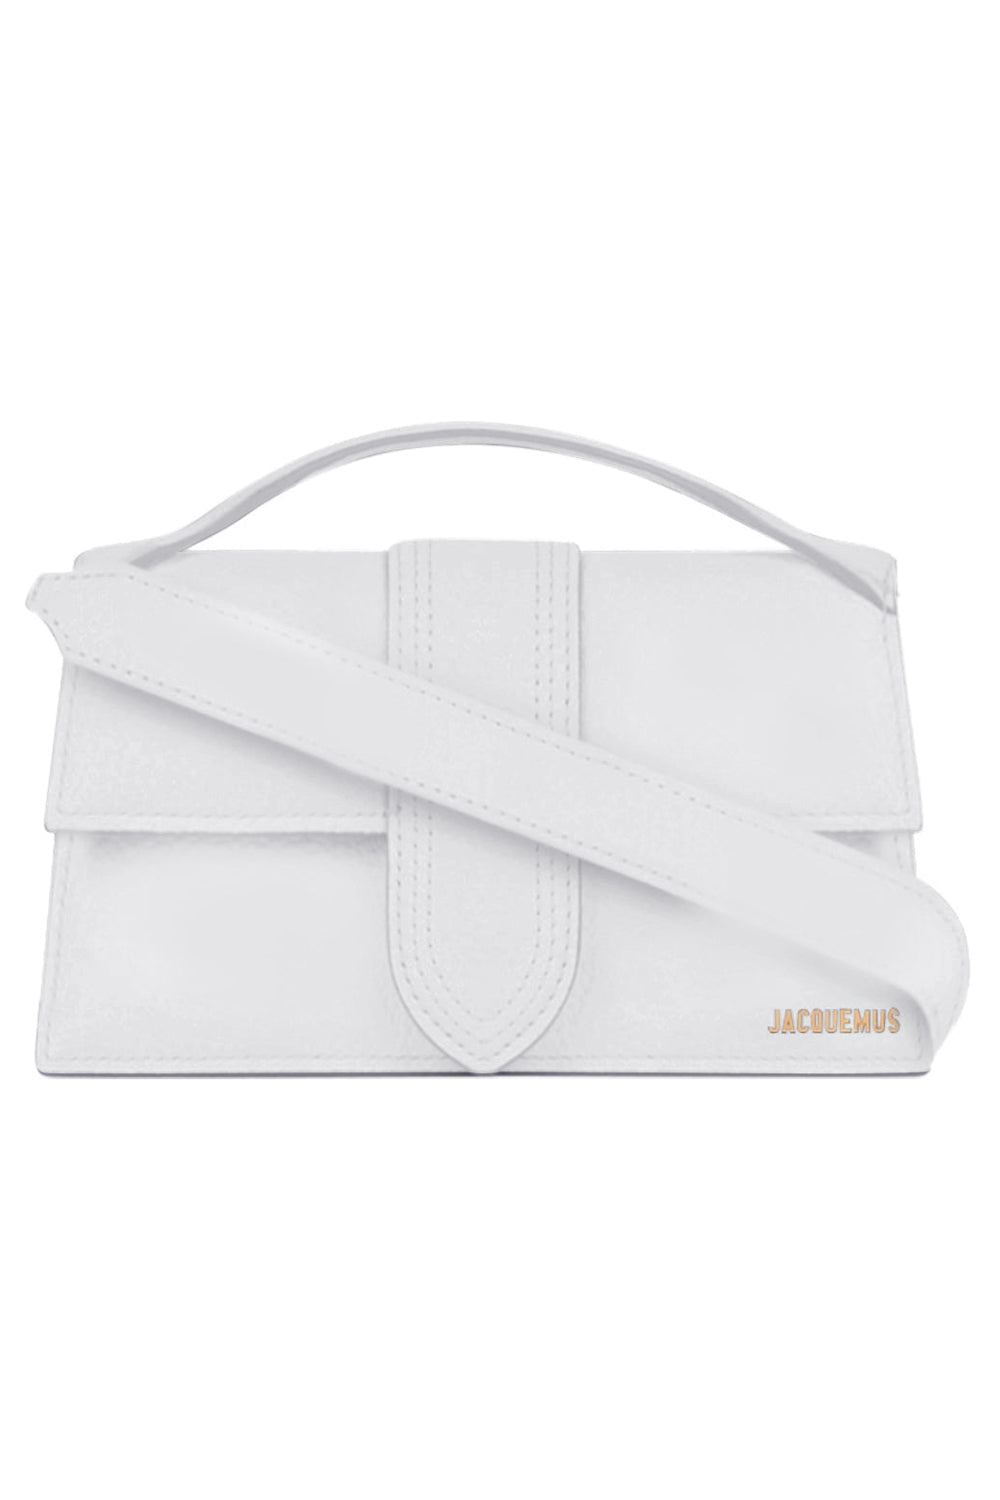 JACQUEMUS BAGS WHITE LE BAMBINOU BAG | WHITE